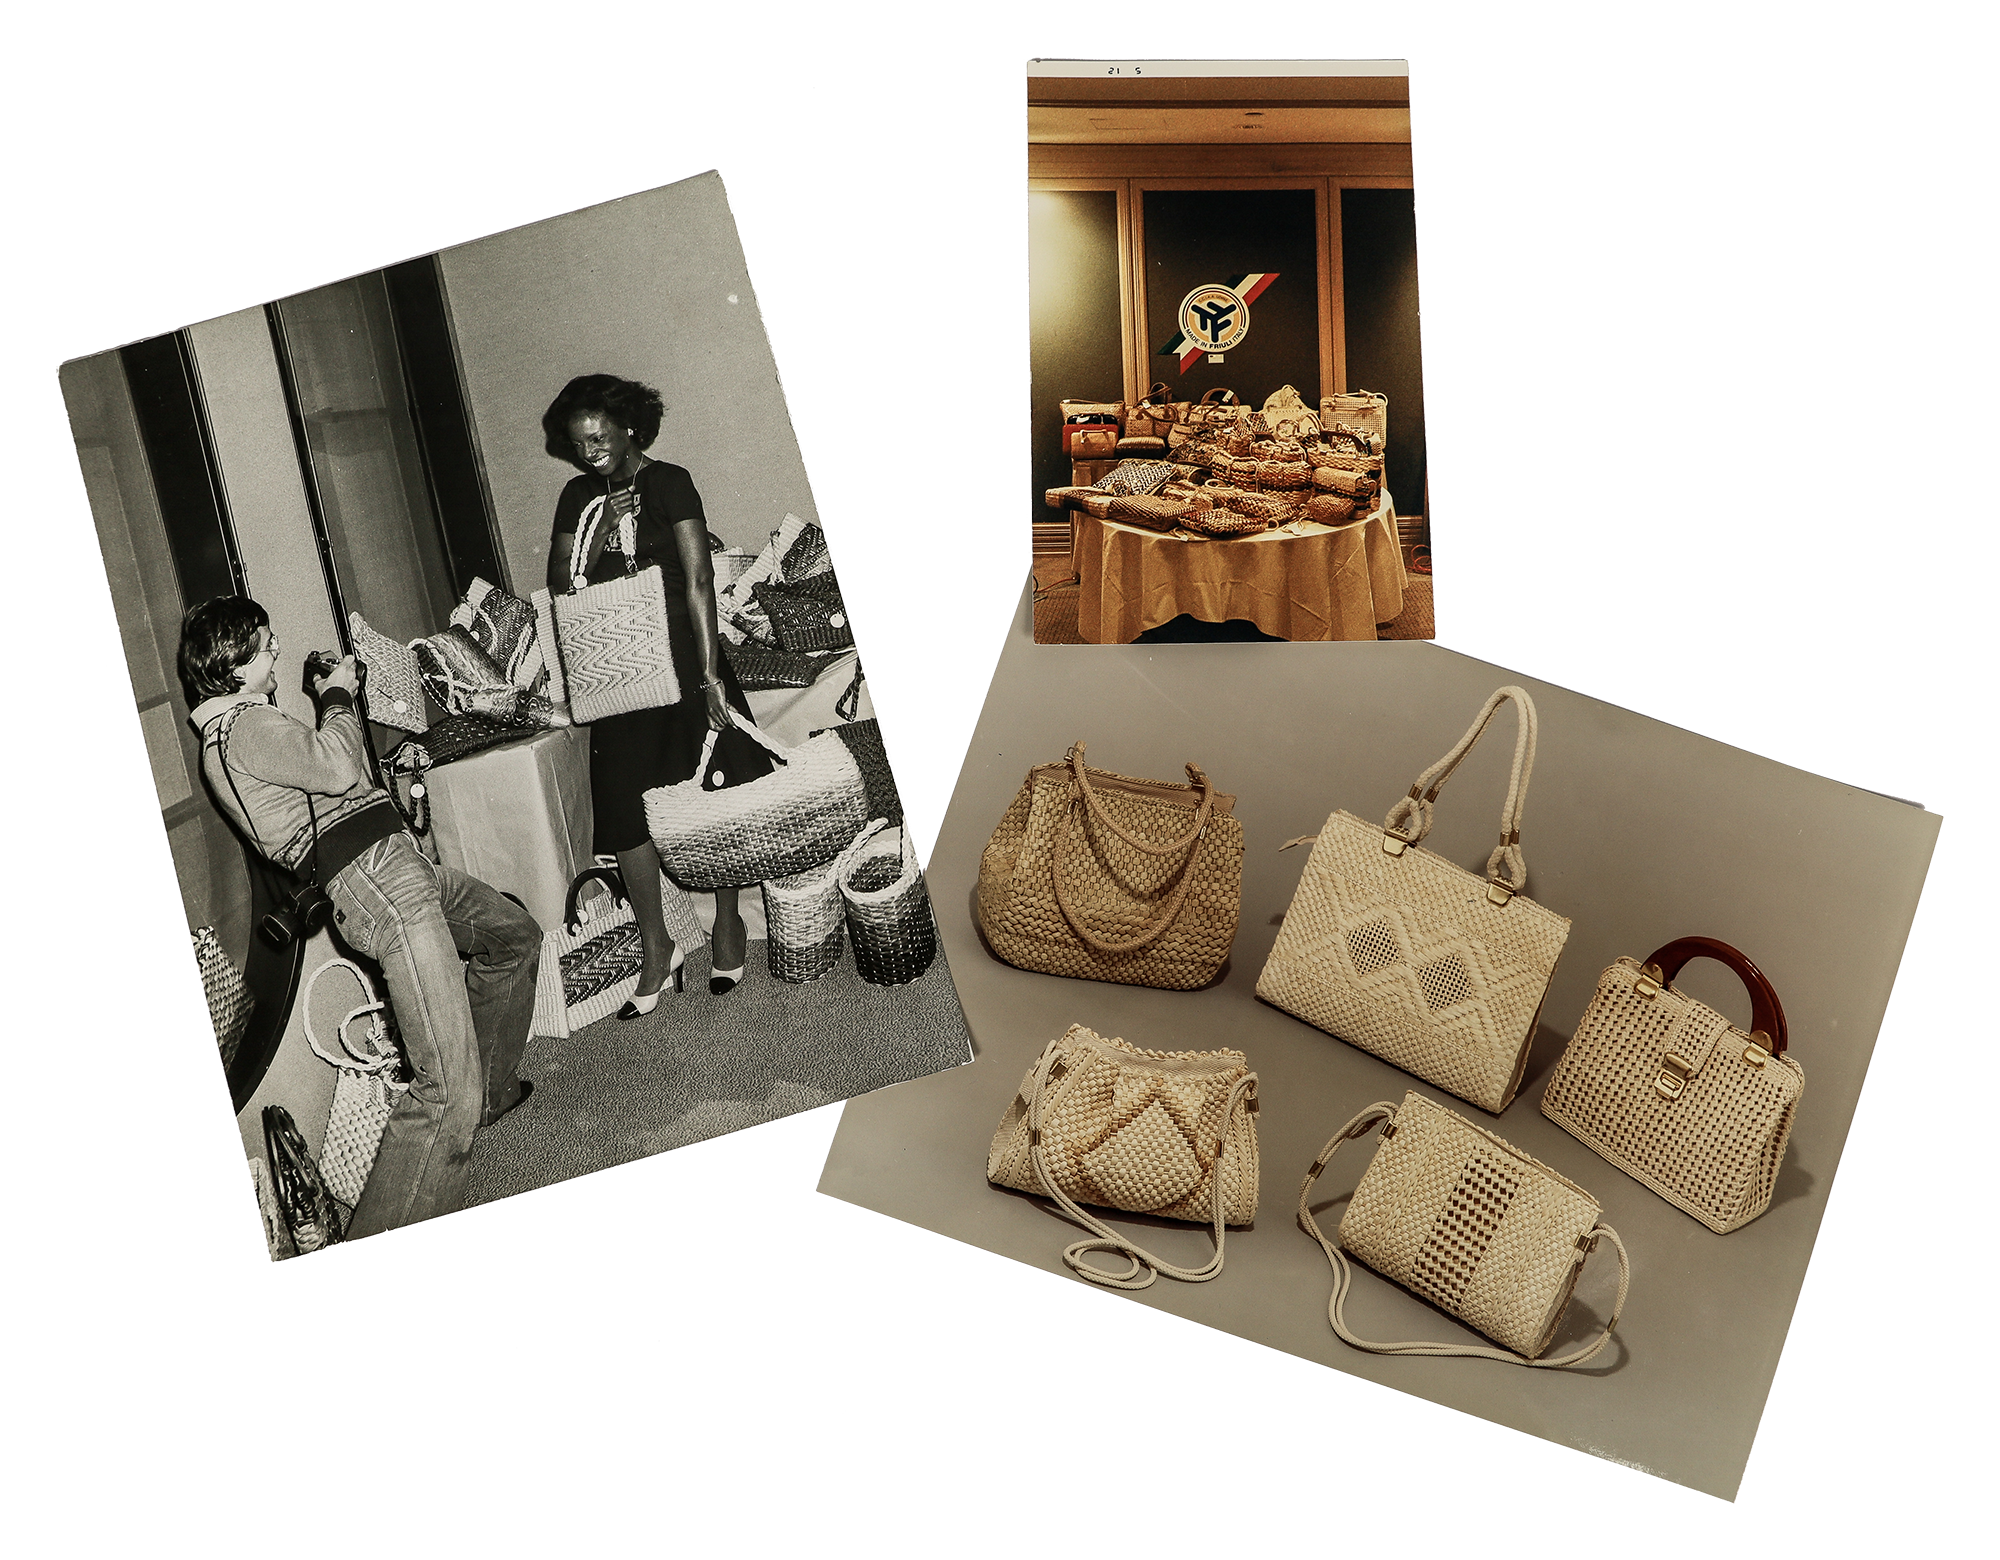 Alma Tonutti, Bags, Alma Tonutti Synthetic Woven Handbag